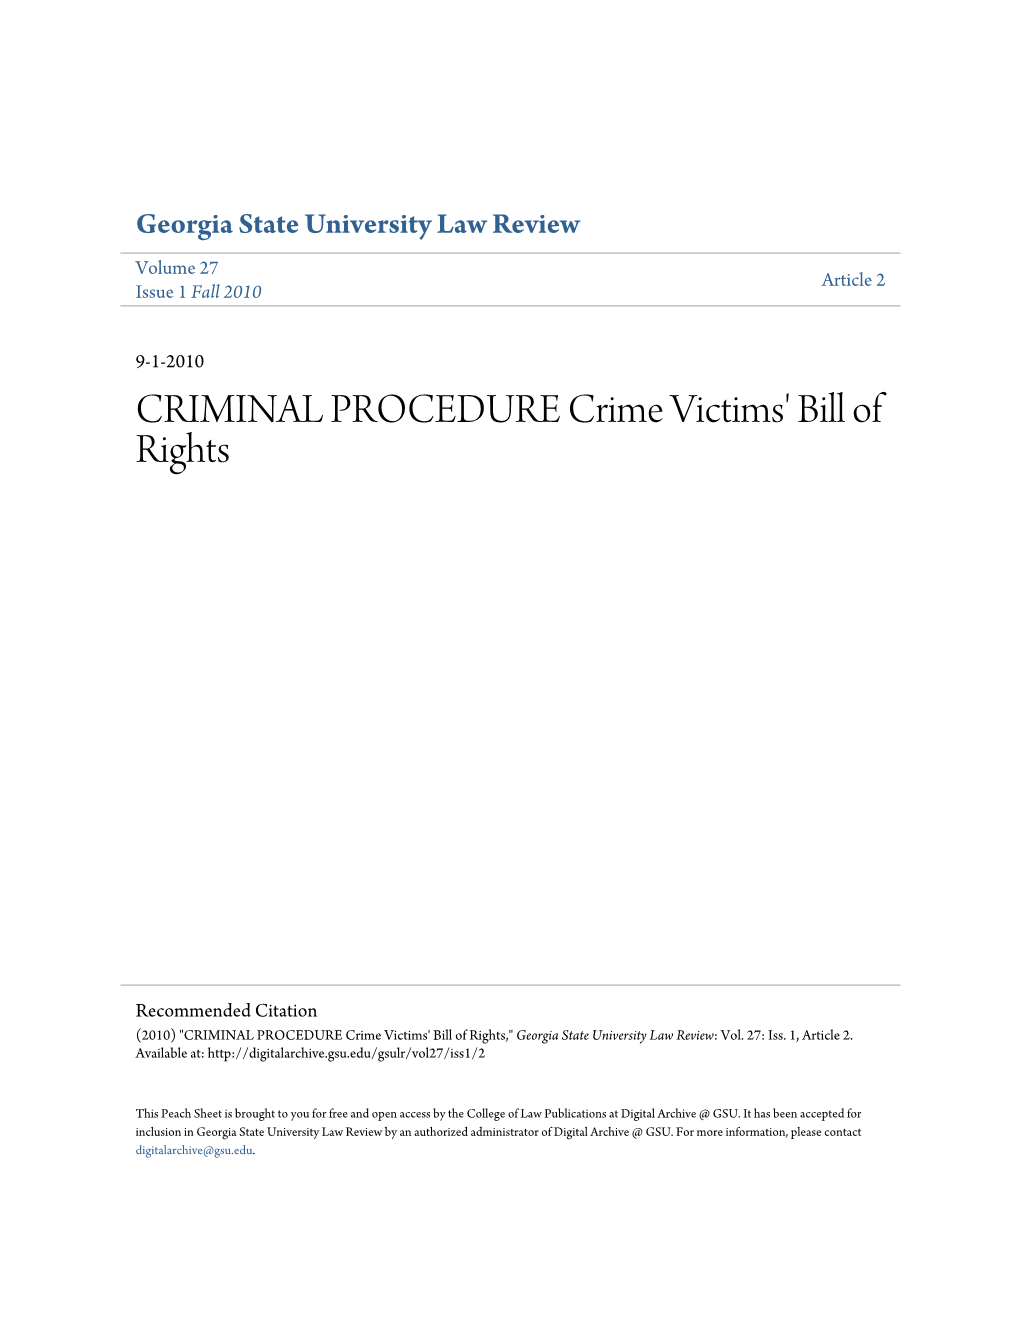 CRIMINAL PROCEDURE Crime Victims' Bill of Rights